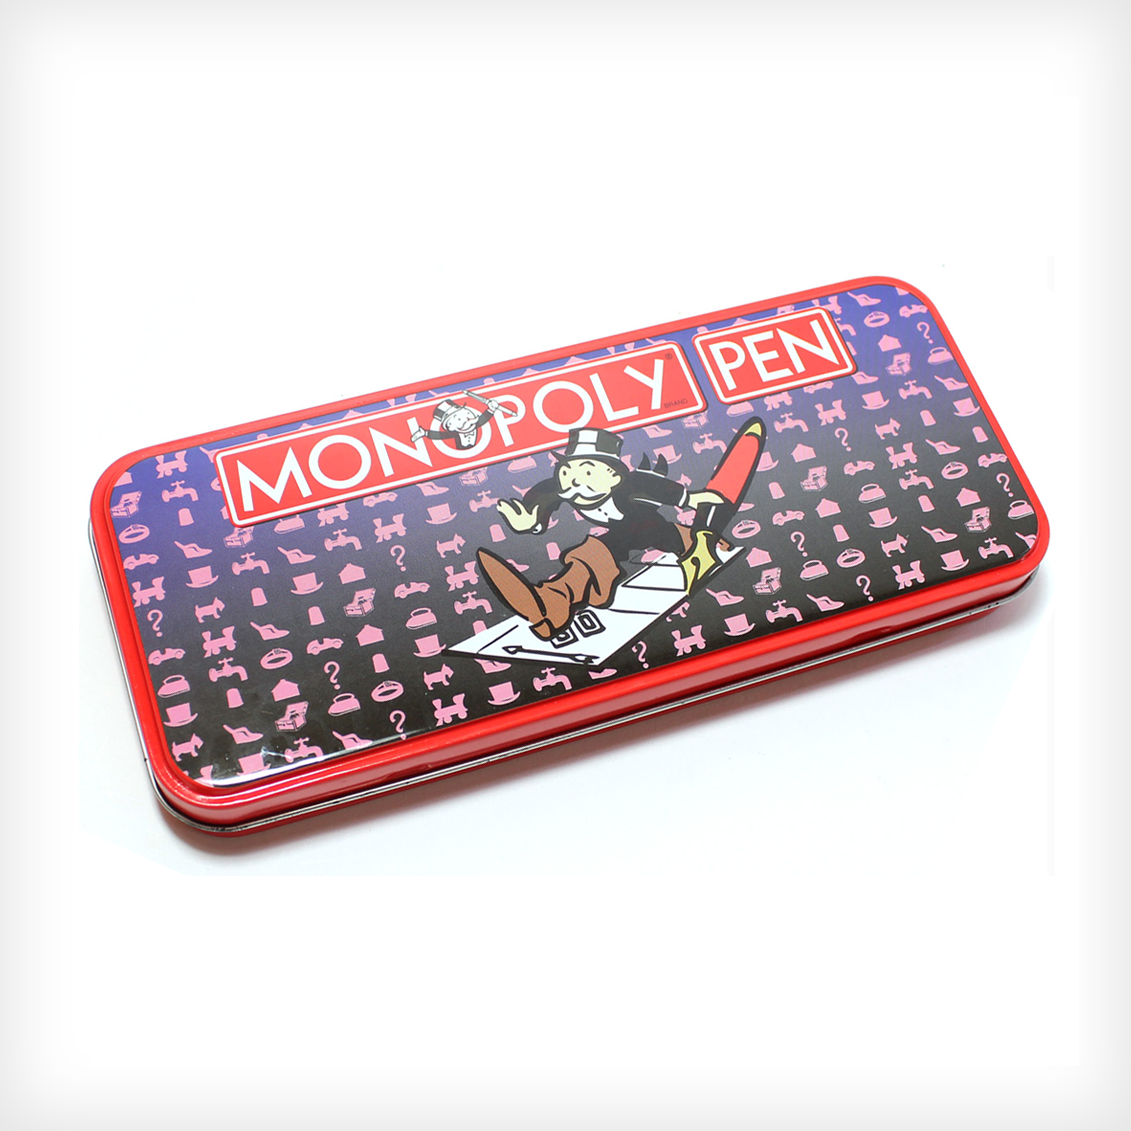 "Monopoly" Pen Packaging